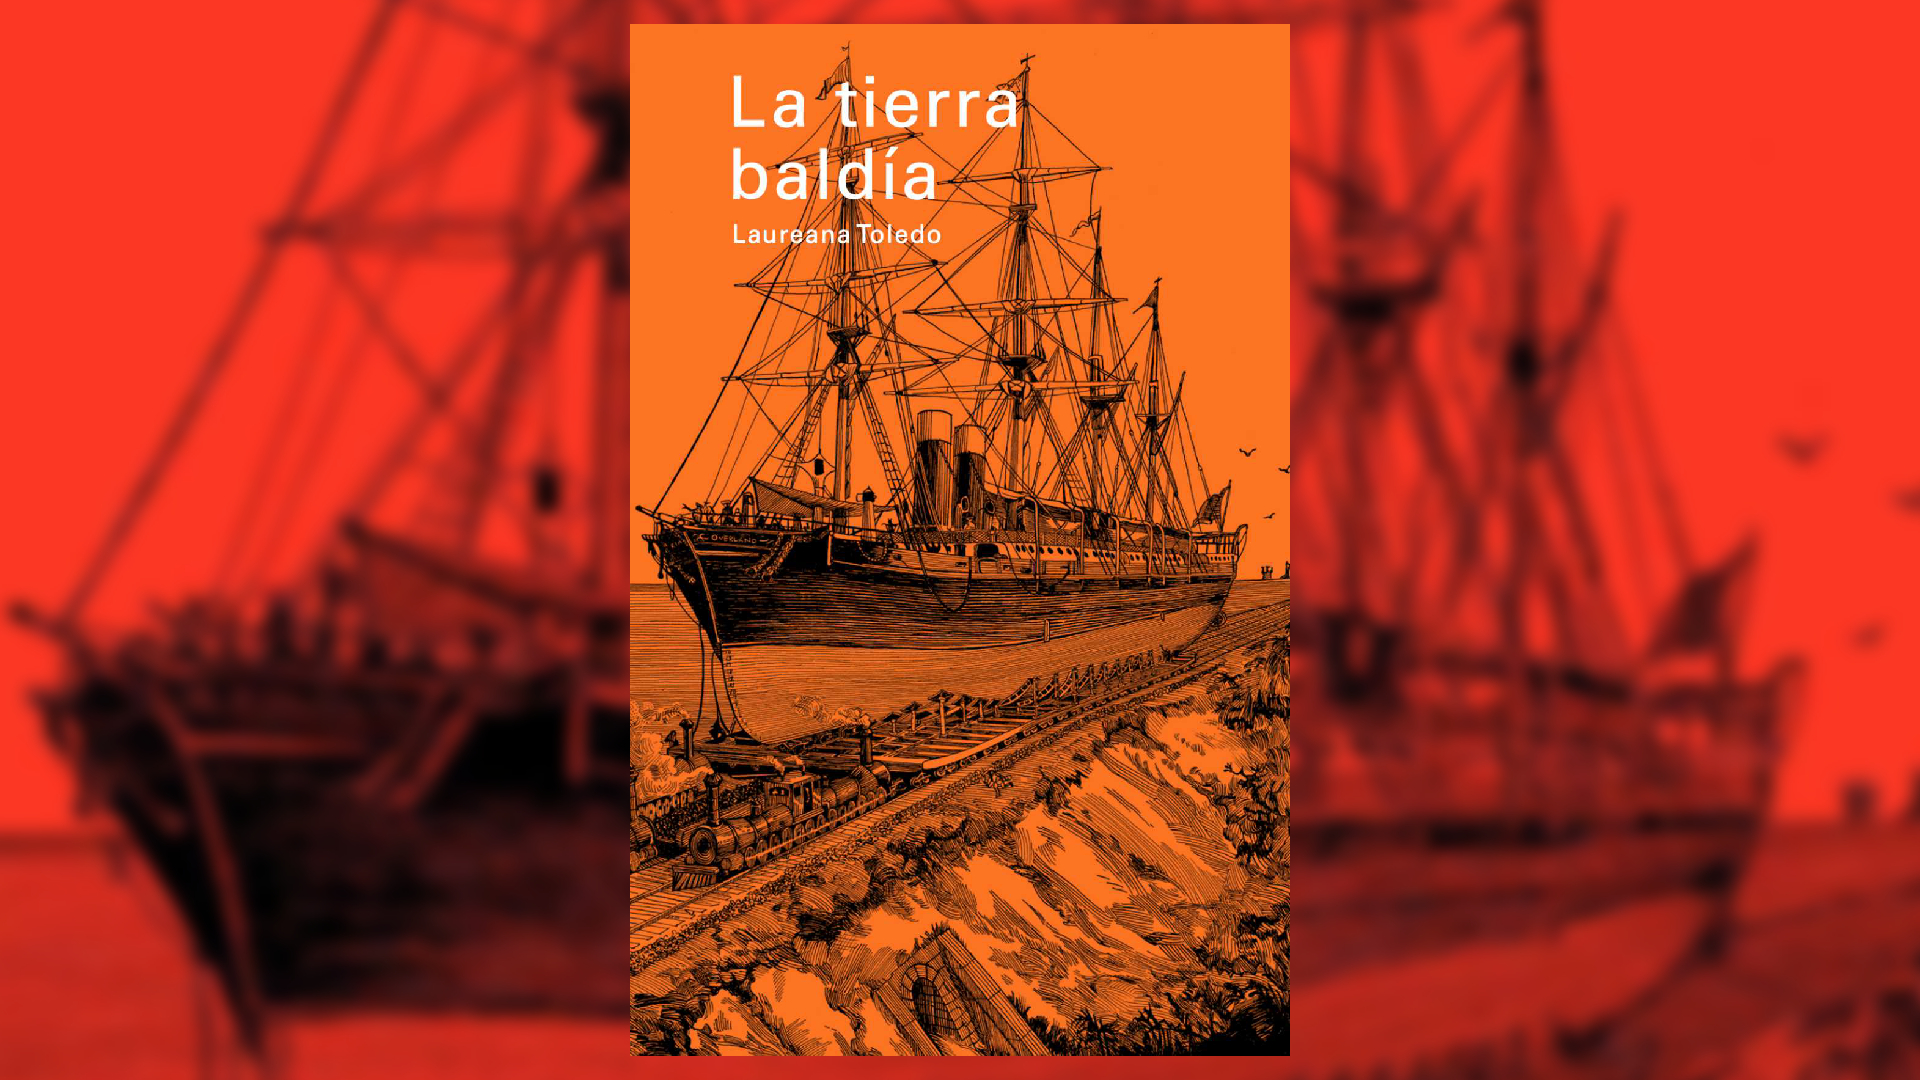 "La tierra baldía" de Laureana Toledo